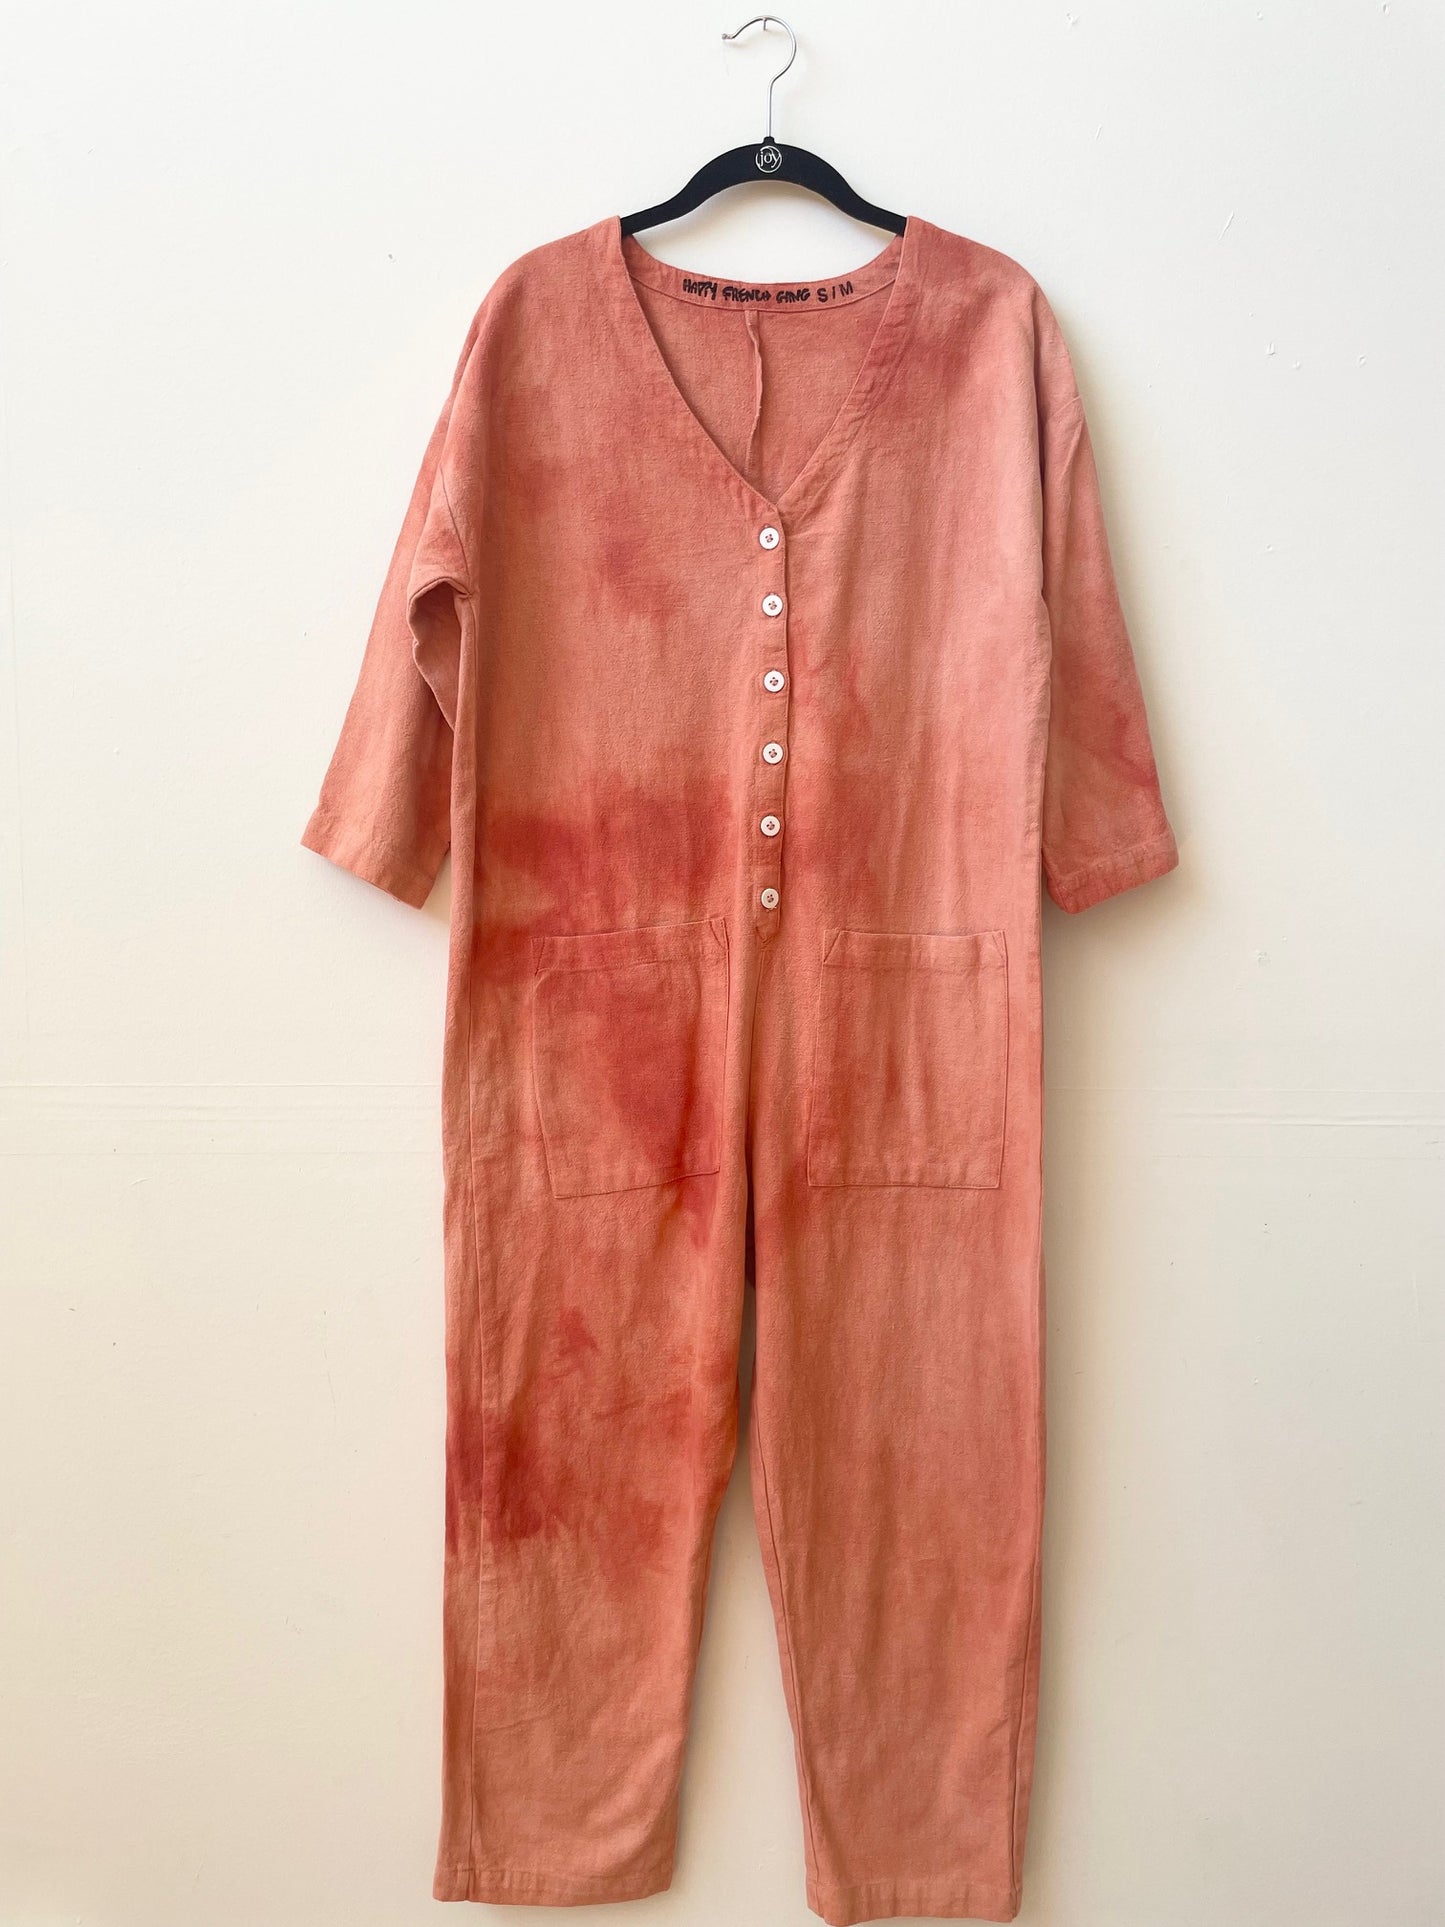 #53 Tie-dye Peach Jumpsuit S/M